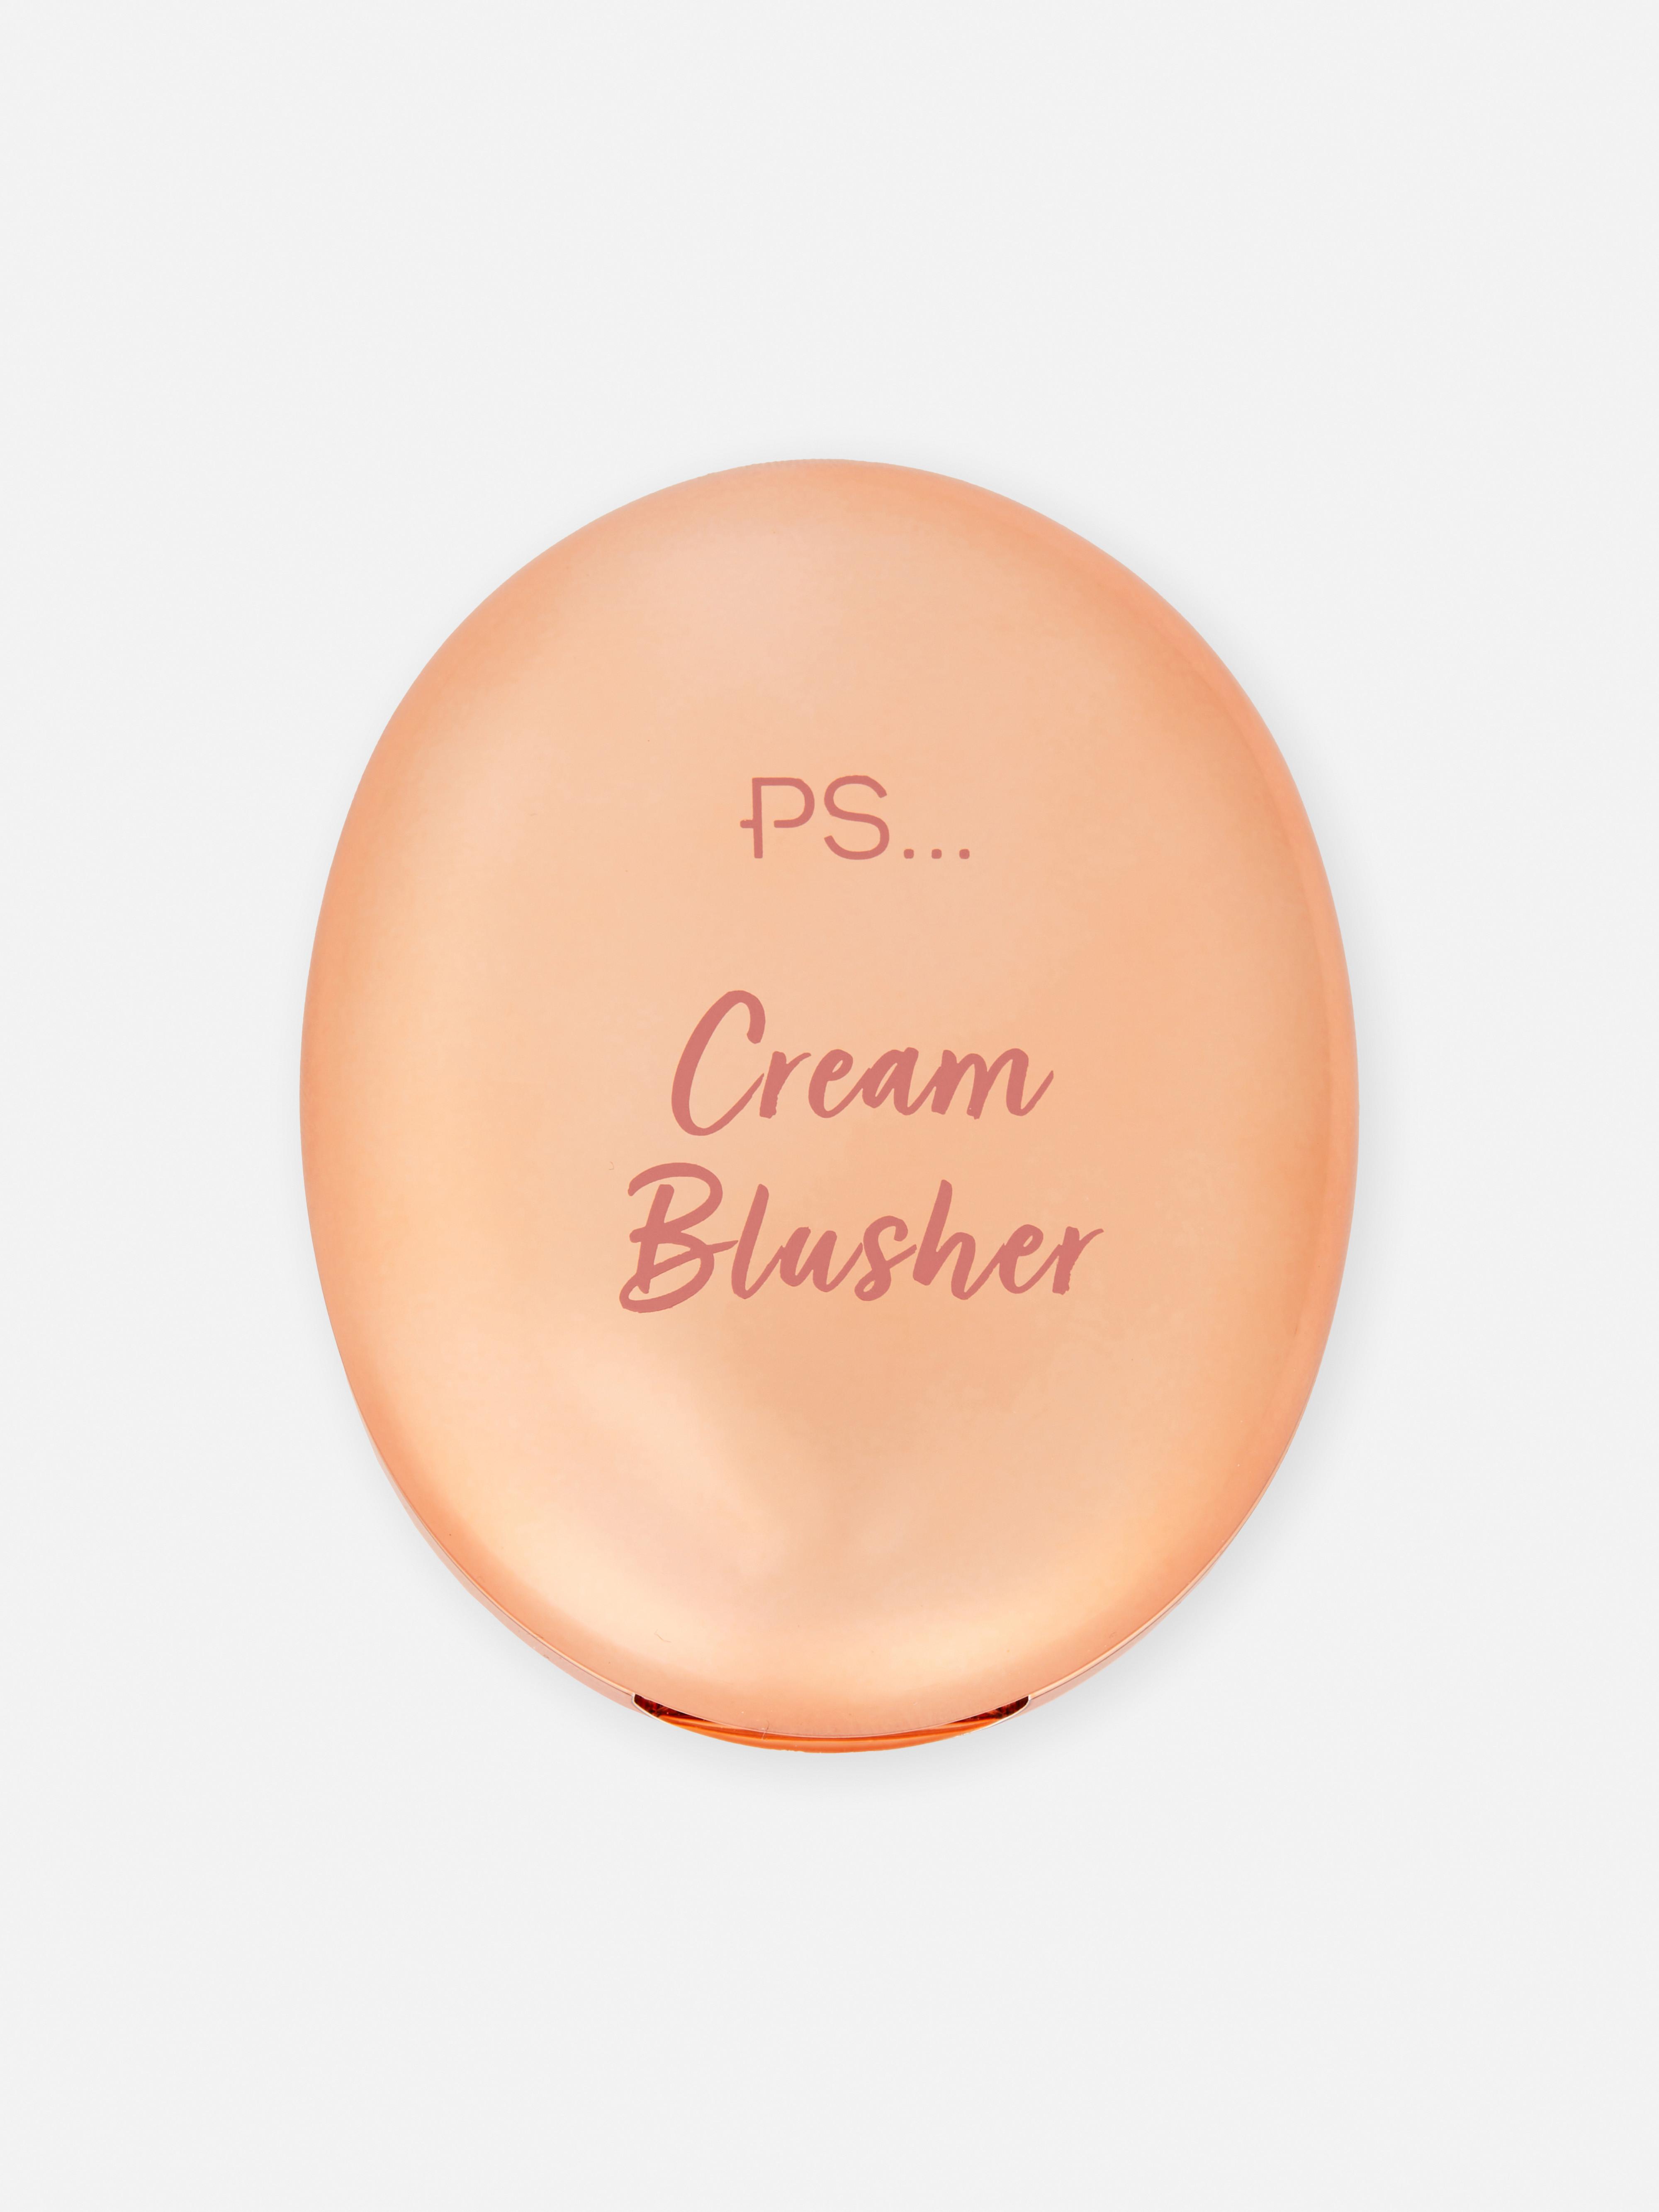 PS Cream Blush